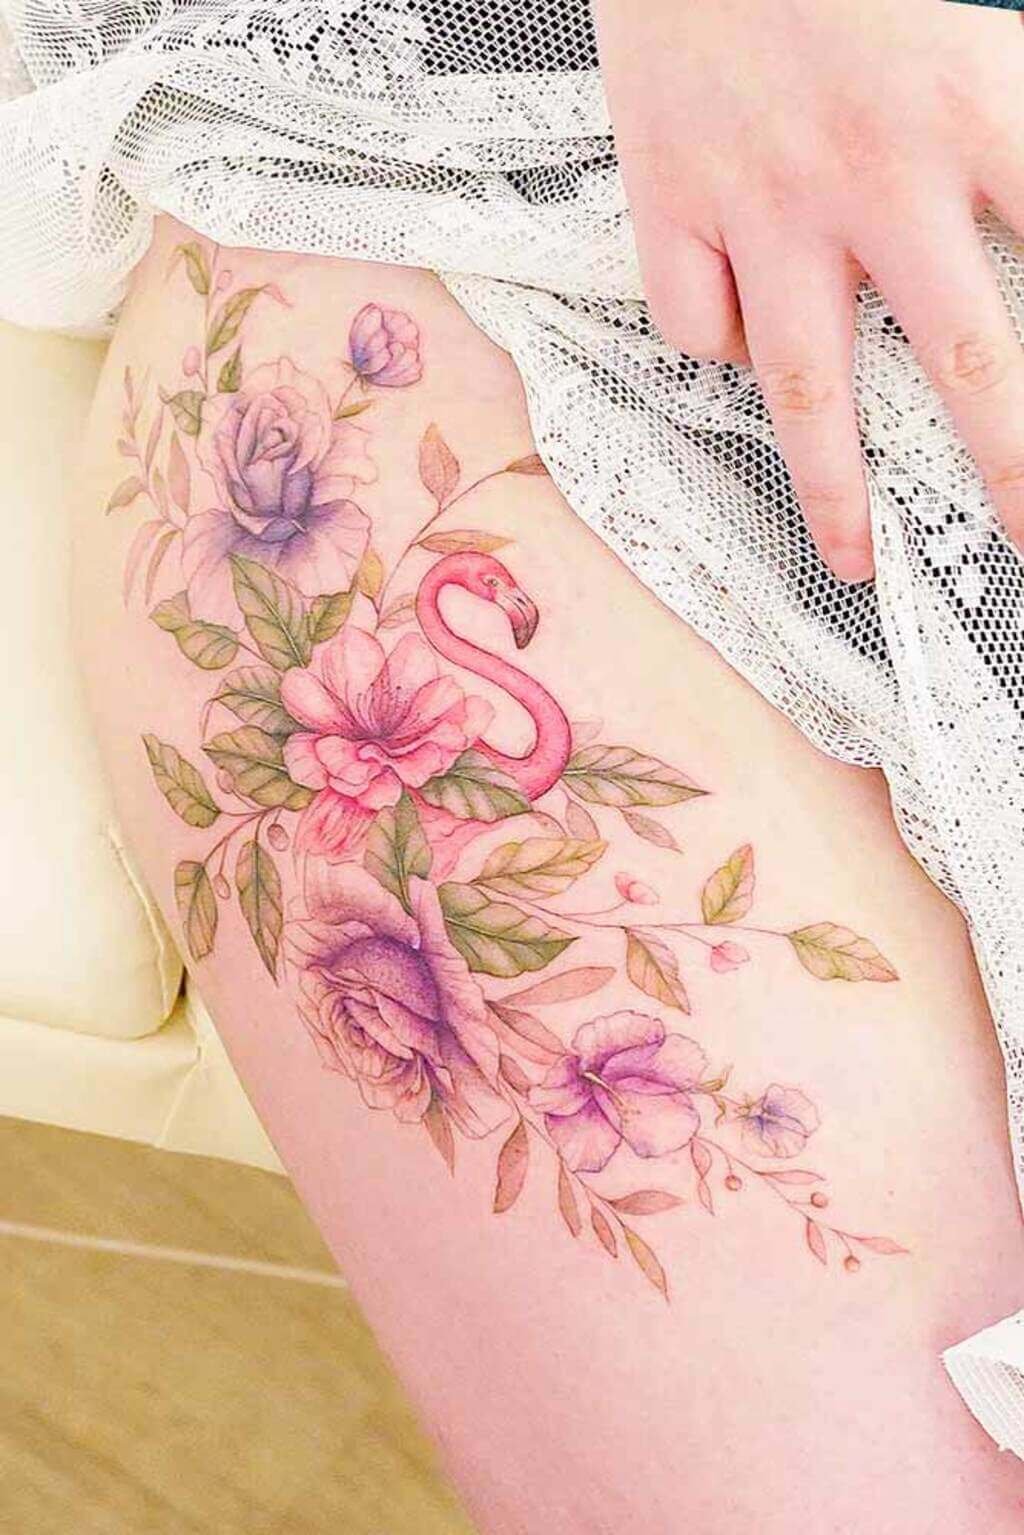 thigh tattoo women